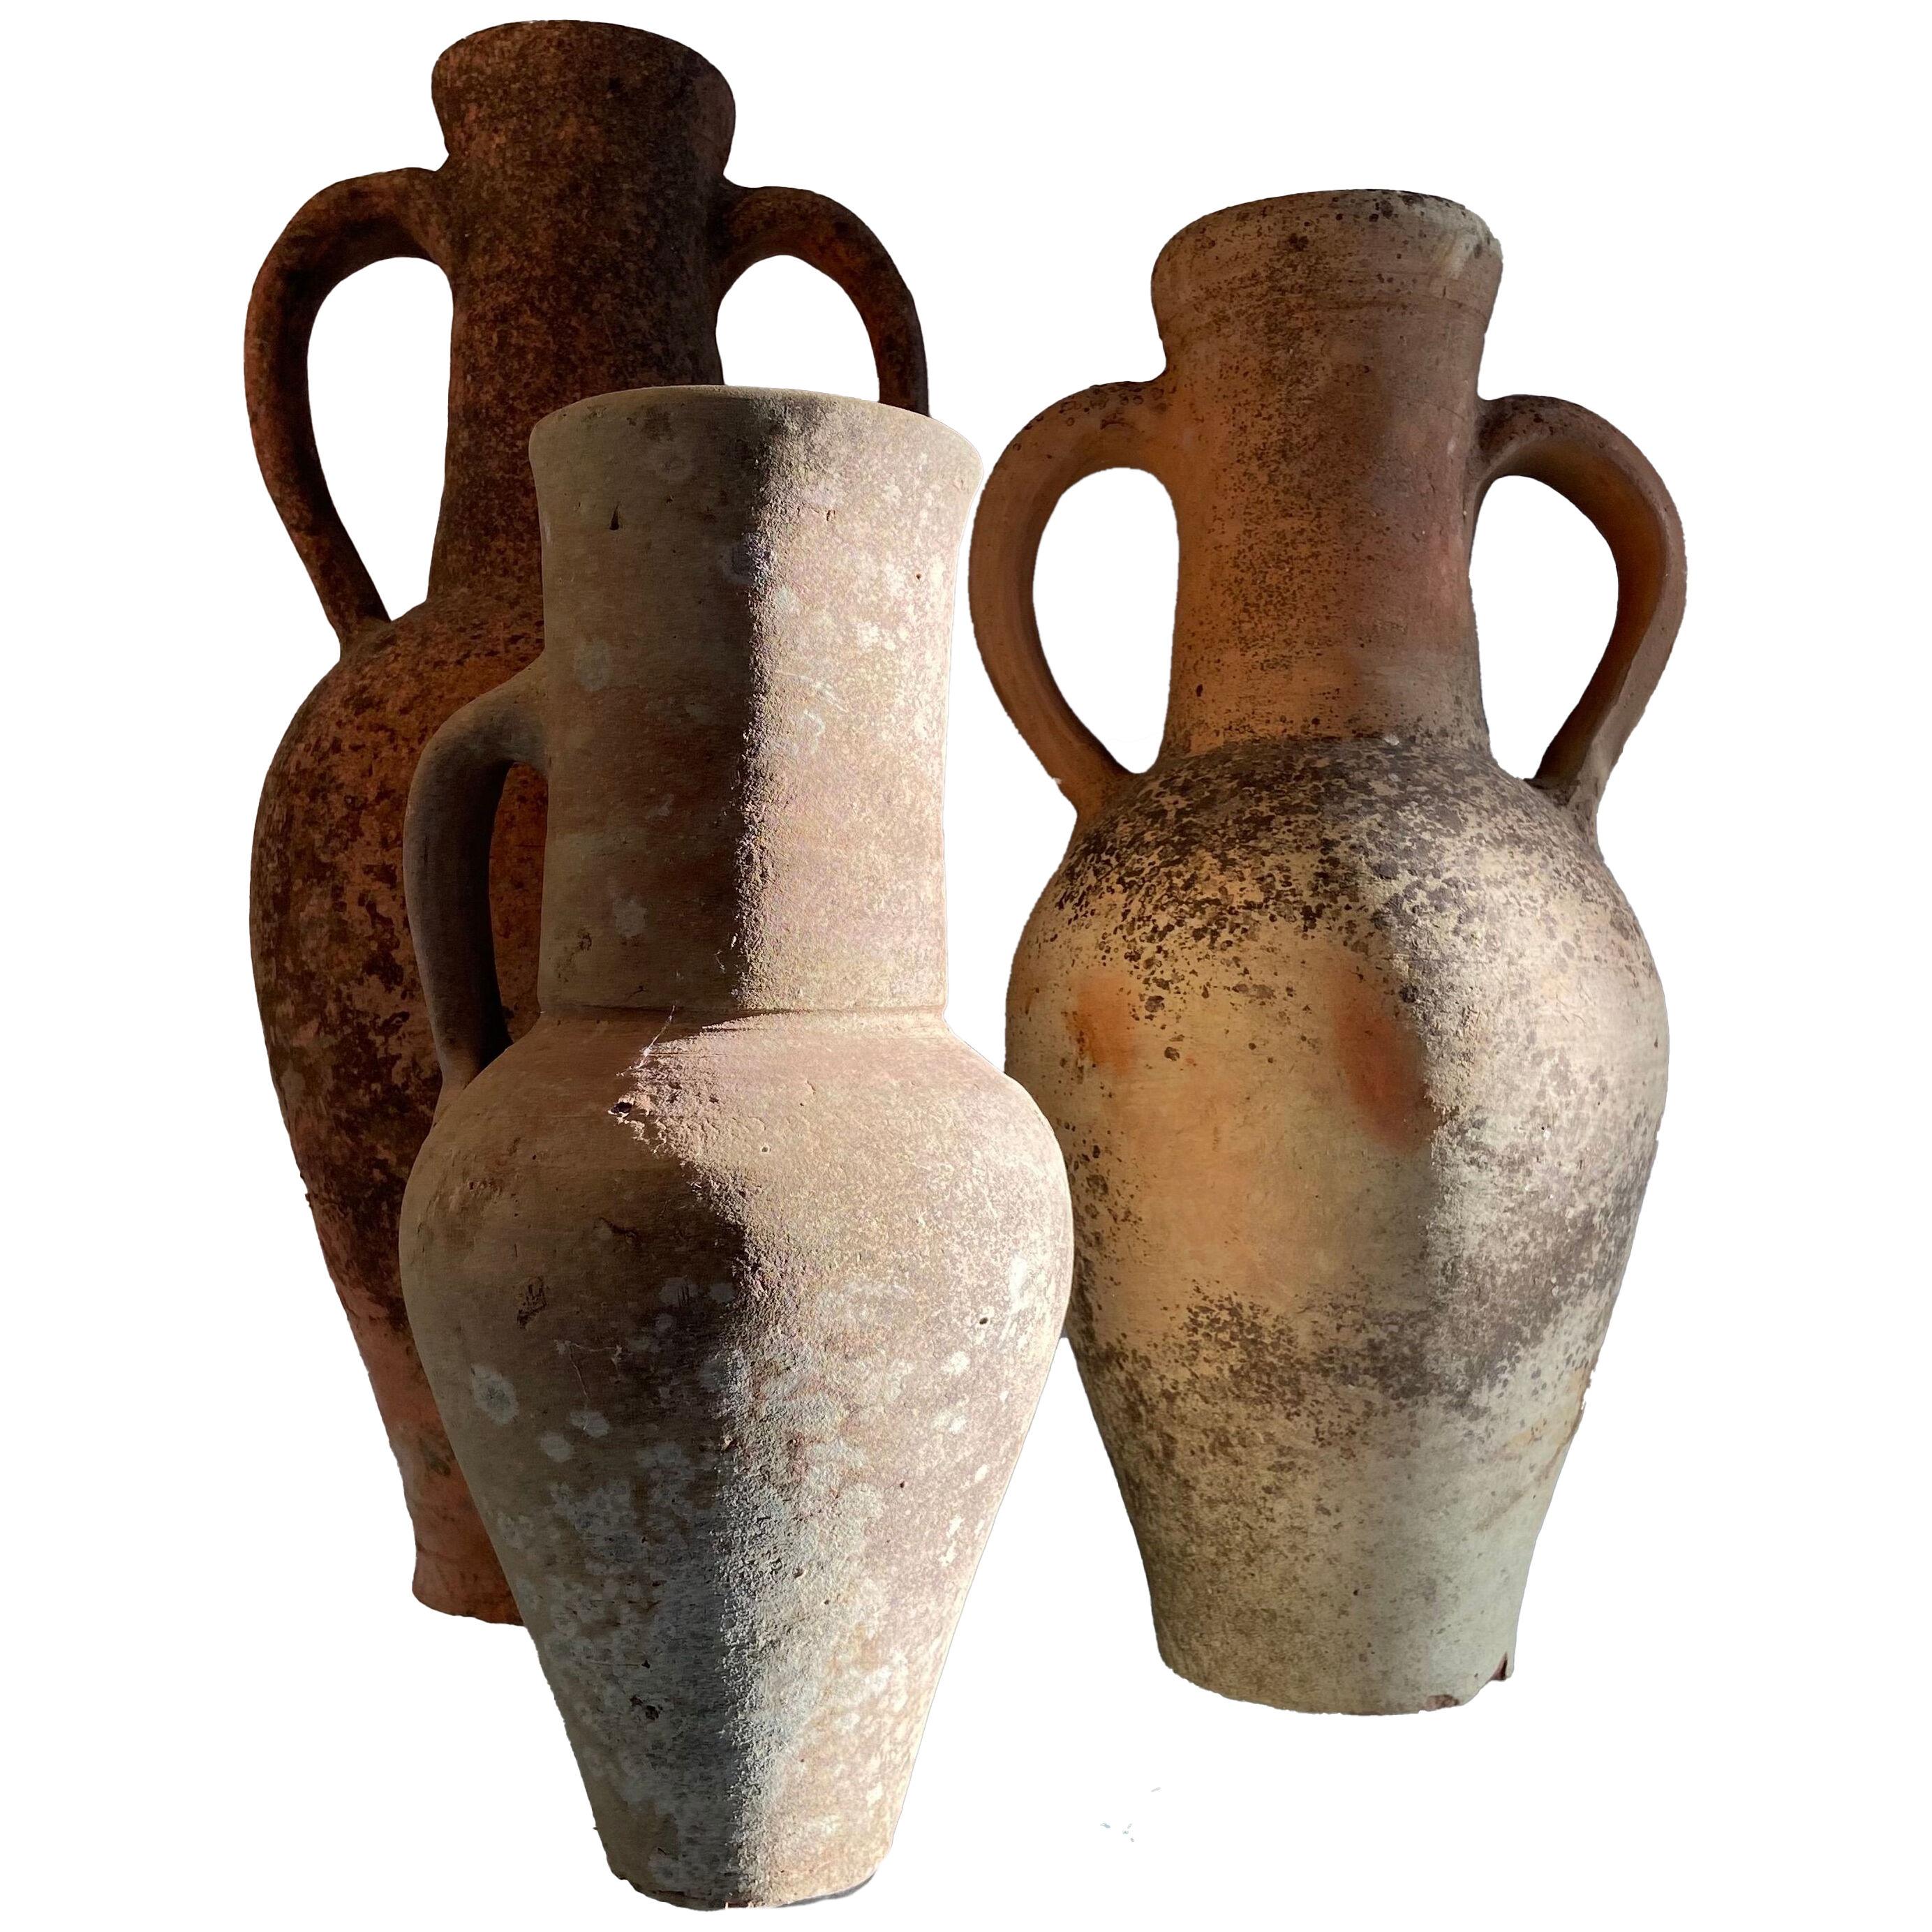 Three Terracotta 19th C. Amphoras